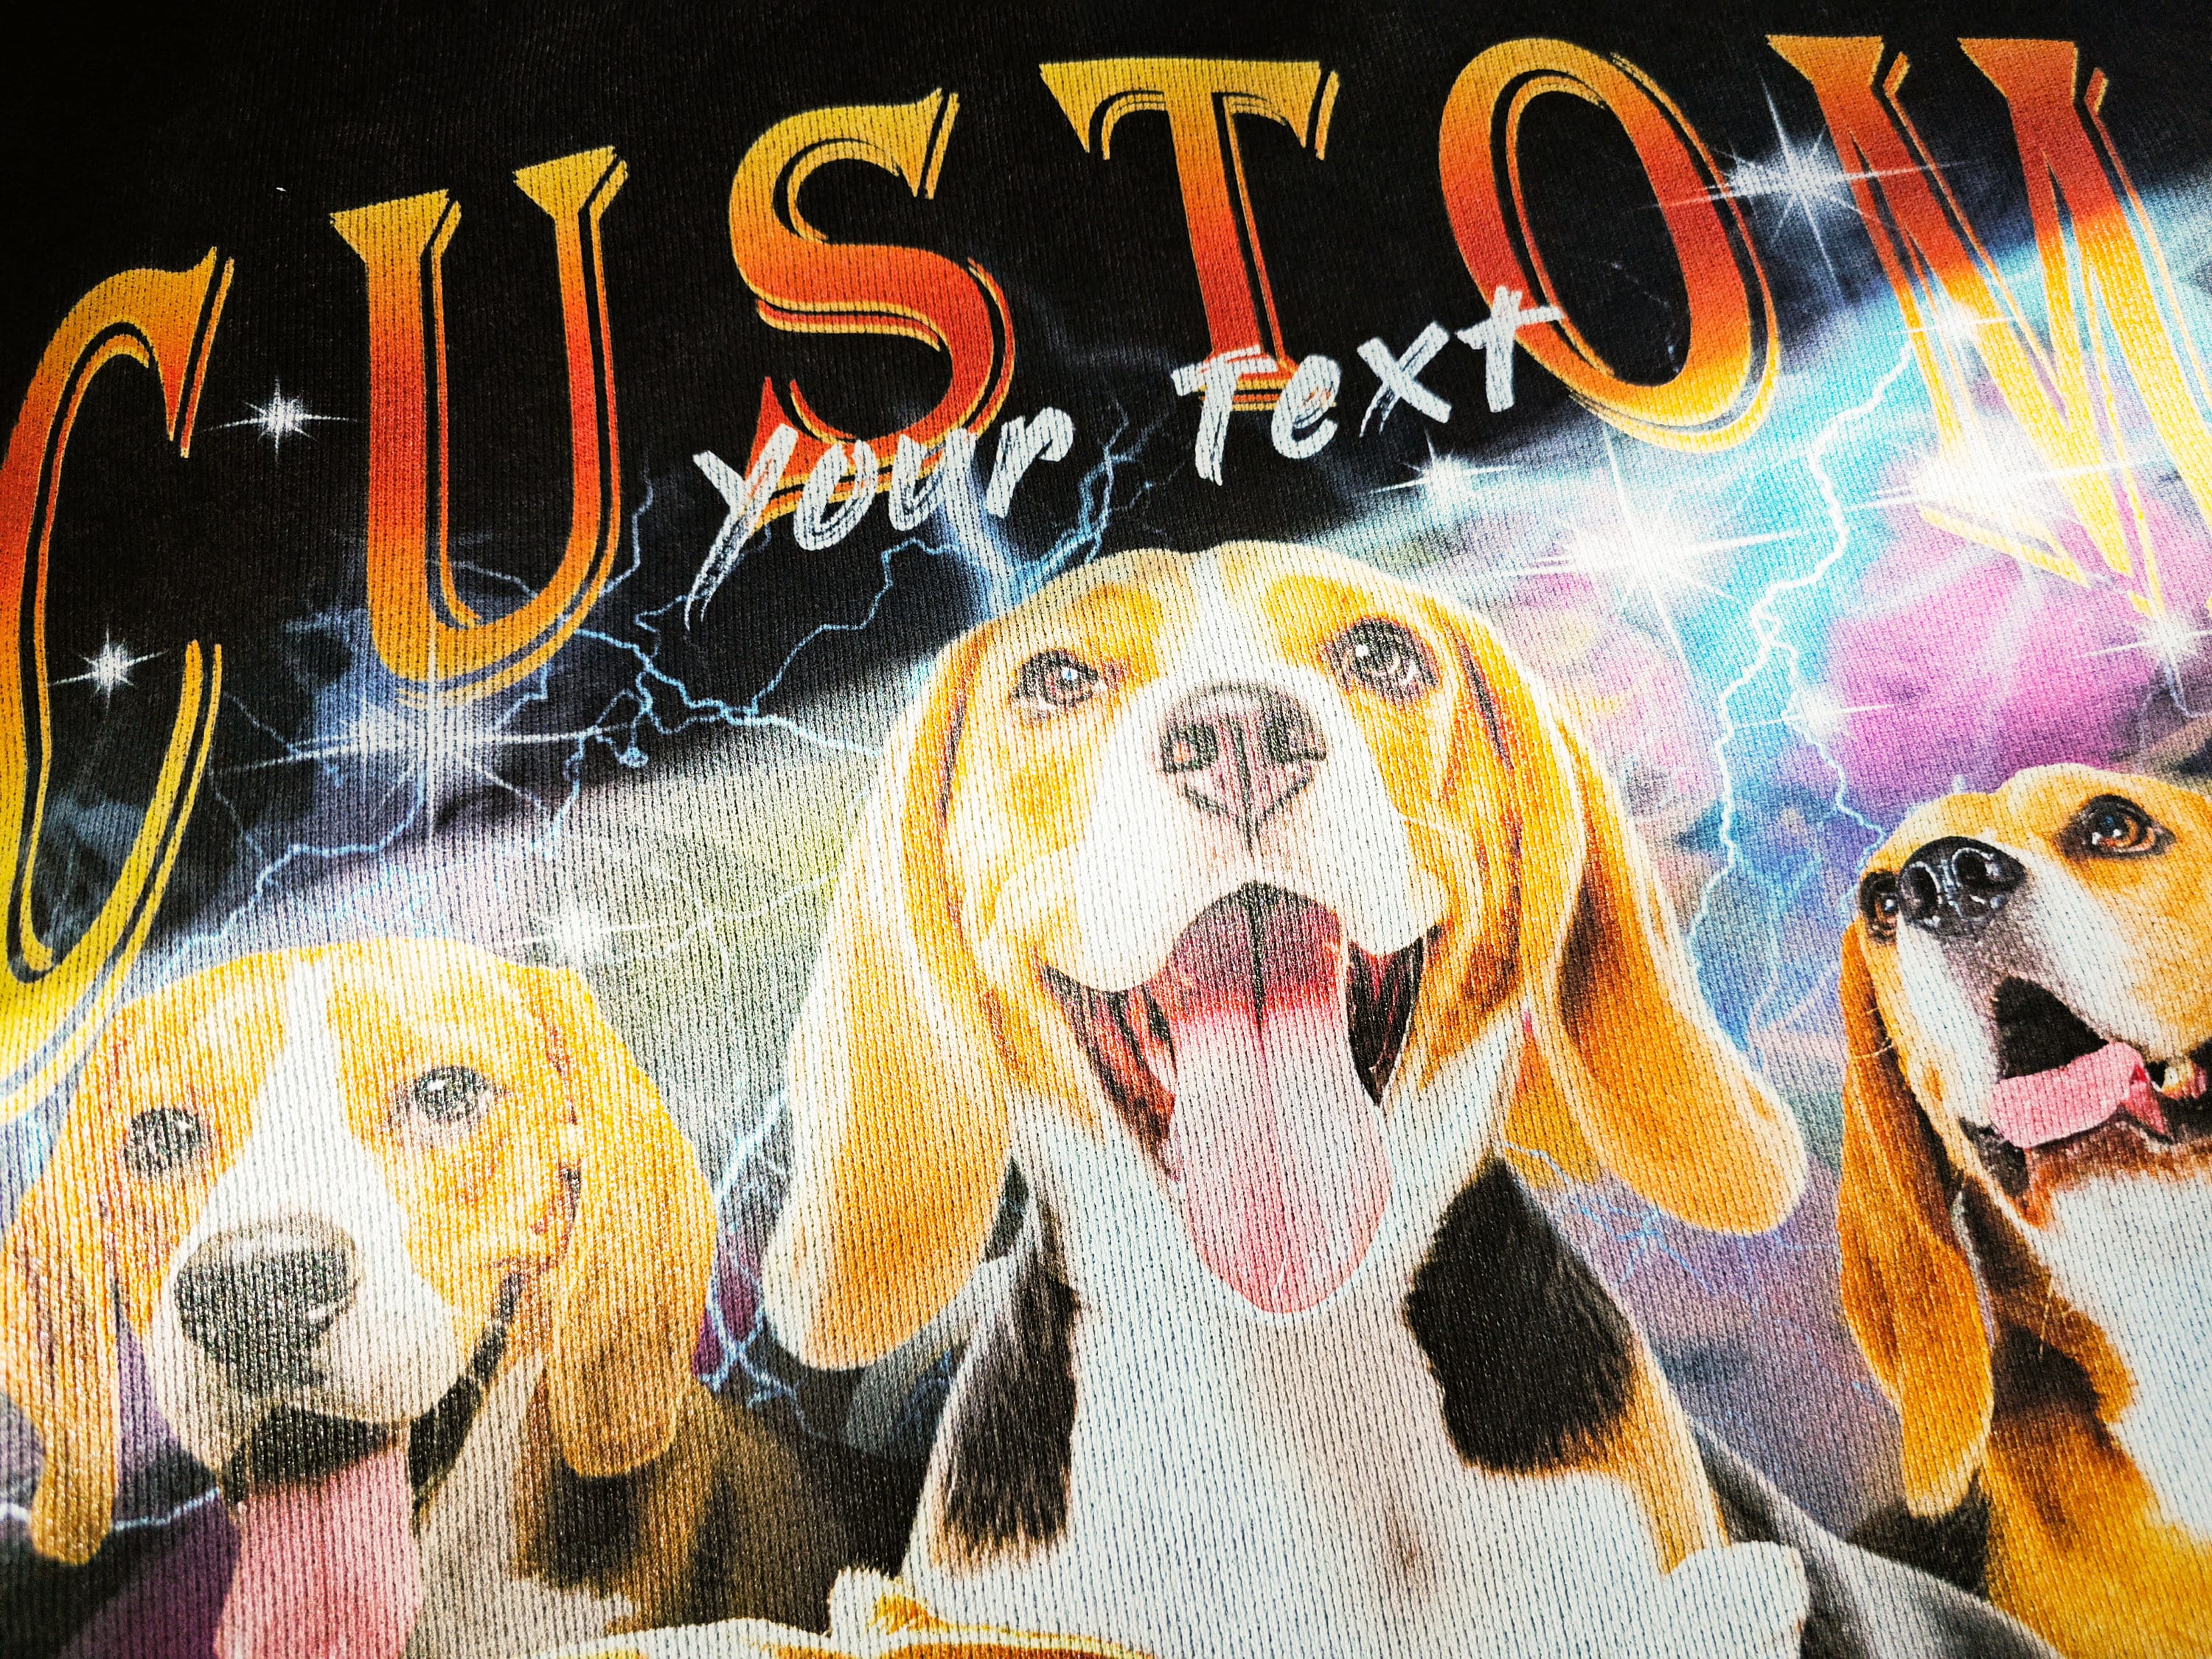 Custom Vintage Pet Shirt Pet Photo + Name